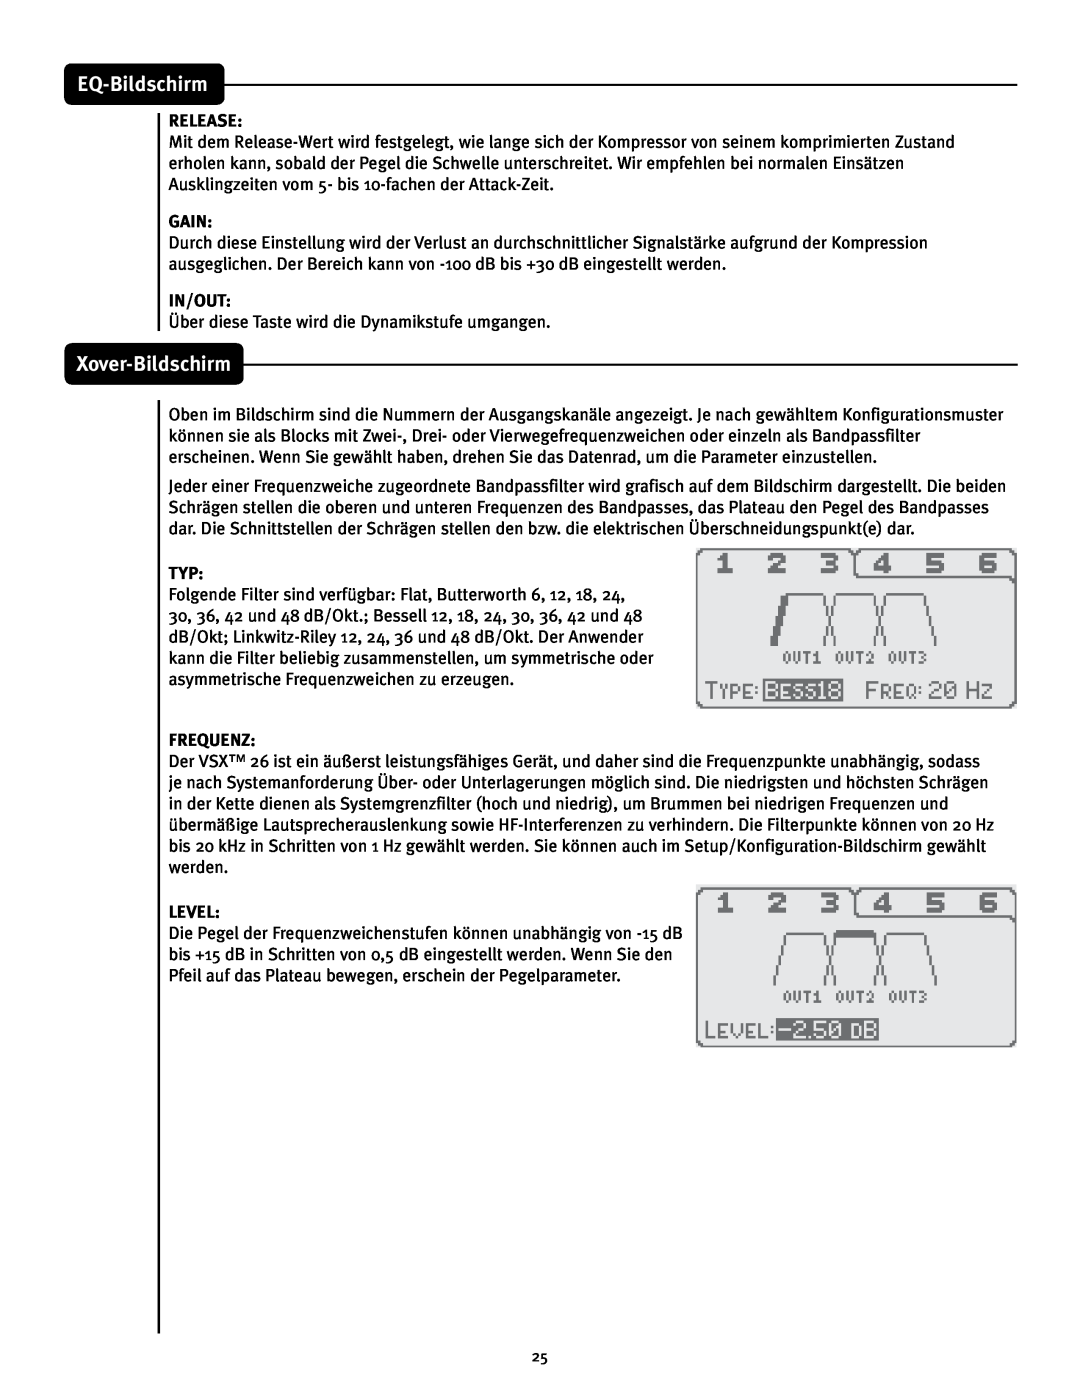 Peavey 26 manual Xover-Bildschirm, EQ-Bildschirm, Release, Gain, In/Out, FrequenZ, Level 